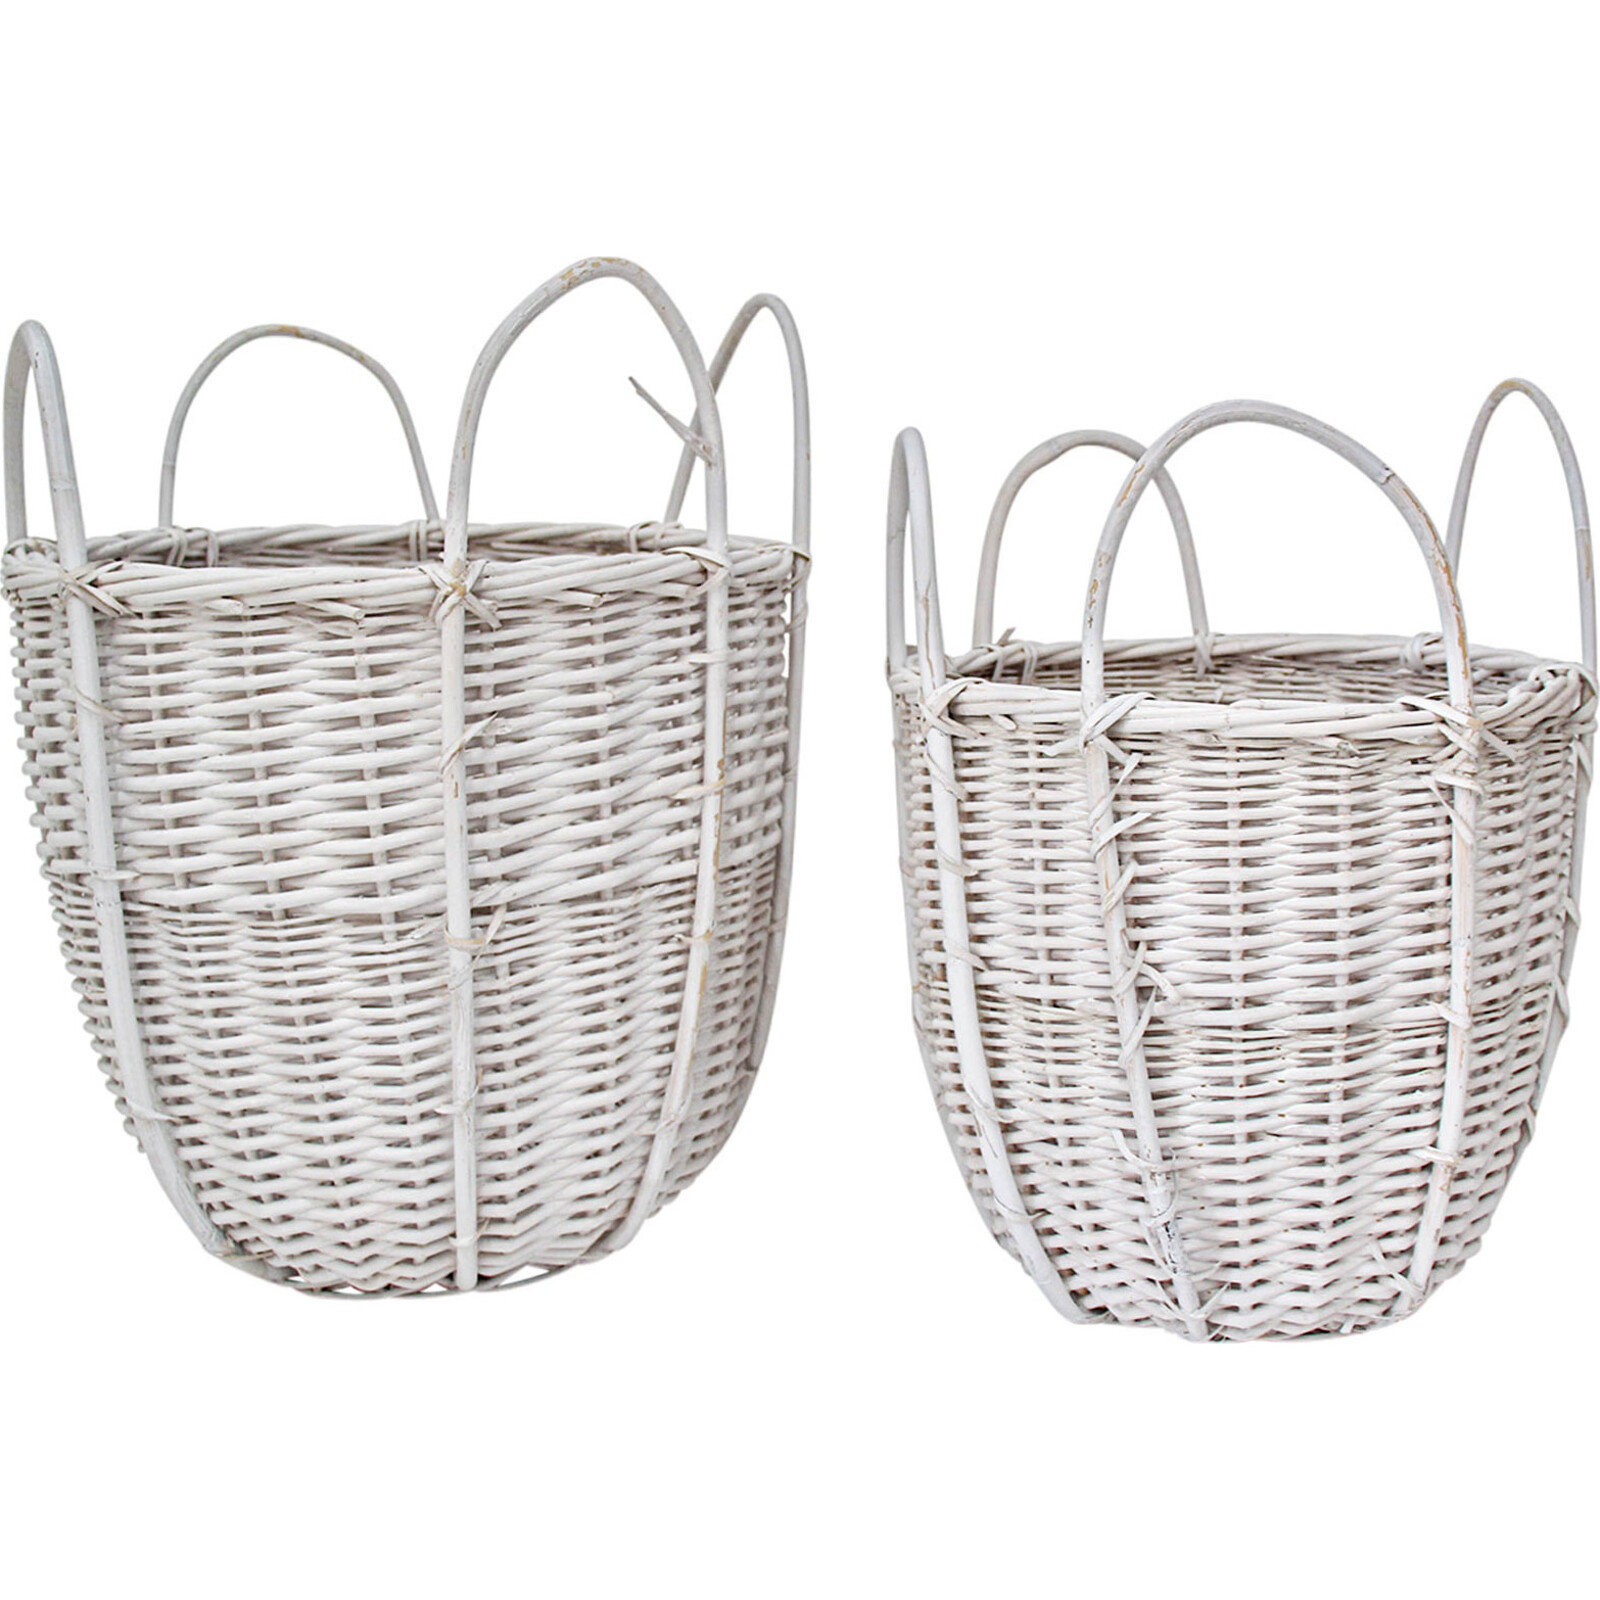 Basket w/Handles S/2 White